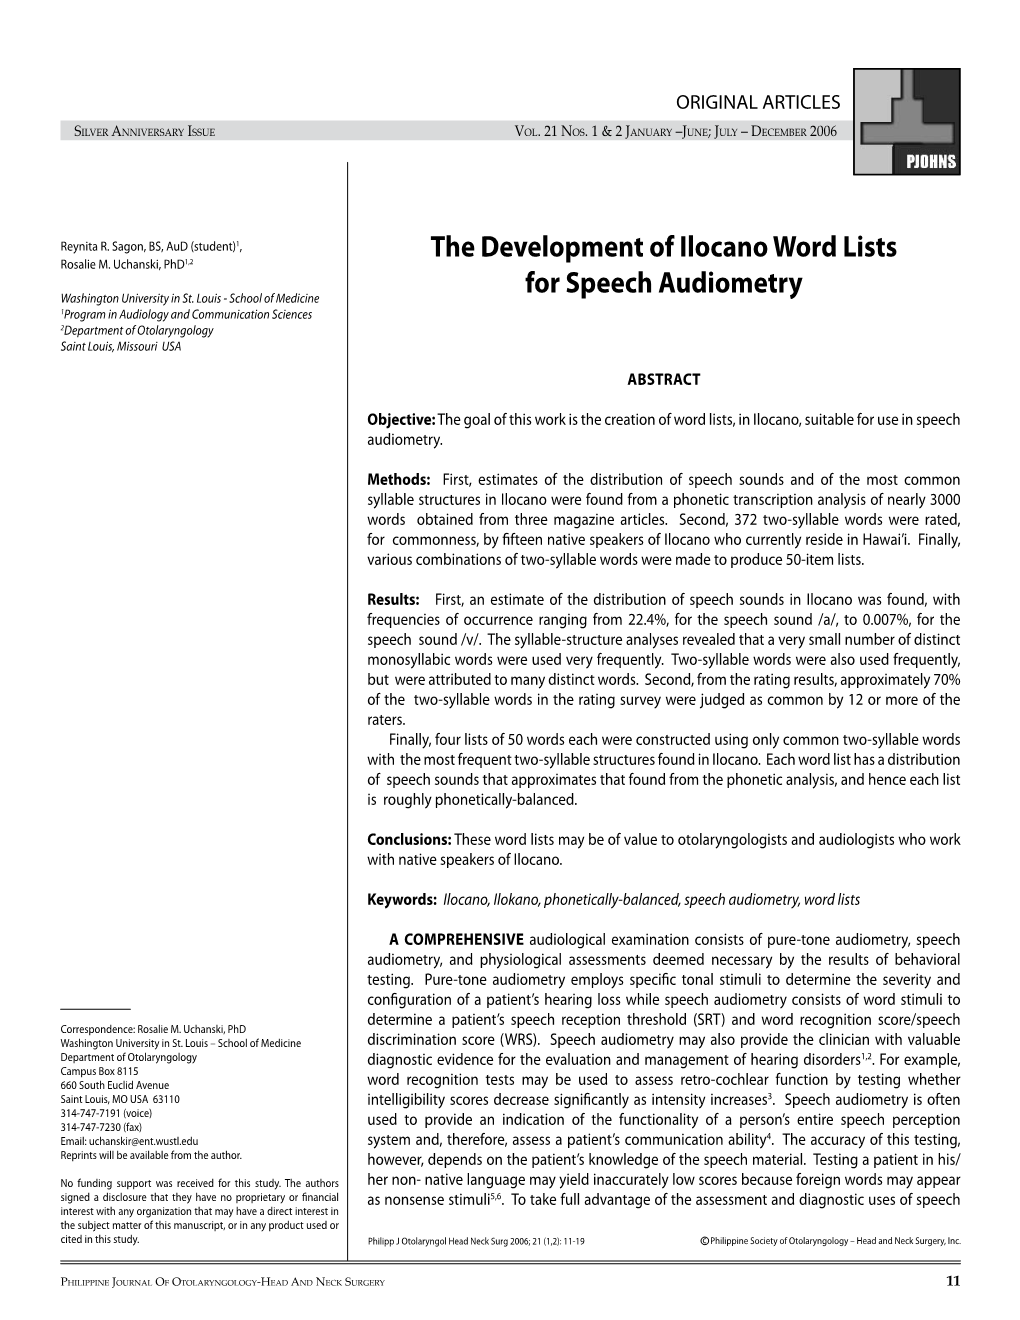 The Development of Ilocano Word Lists for Speech Audiometry